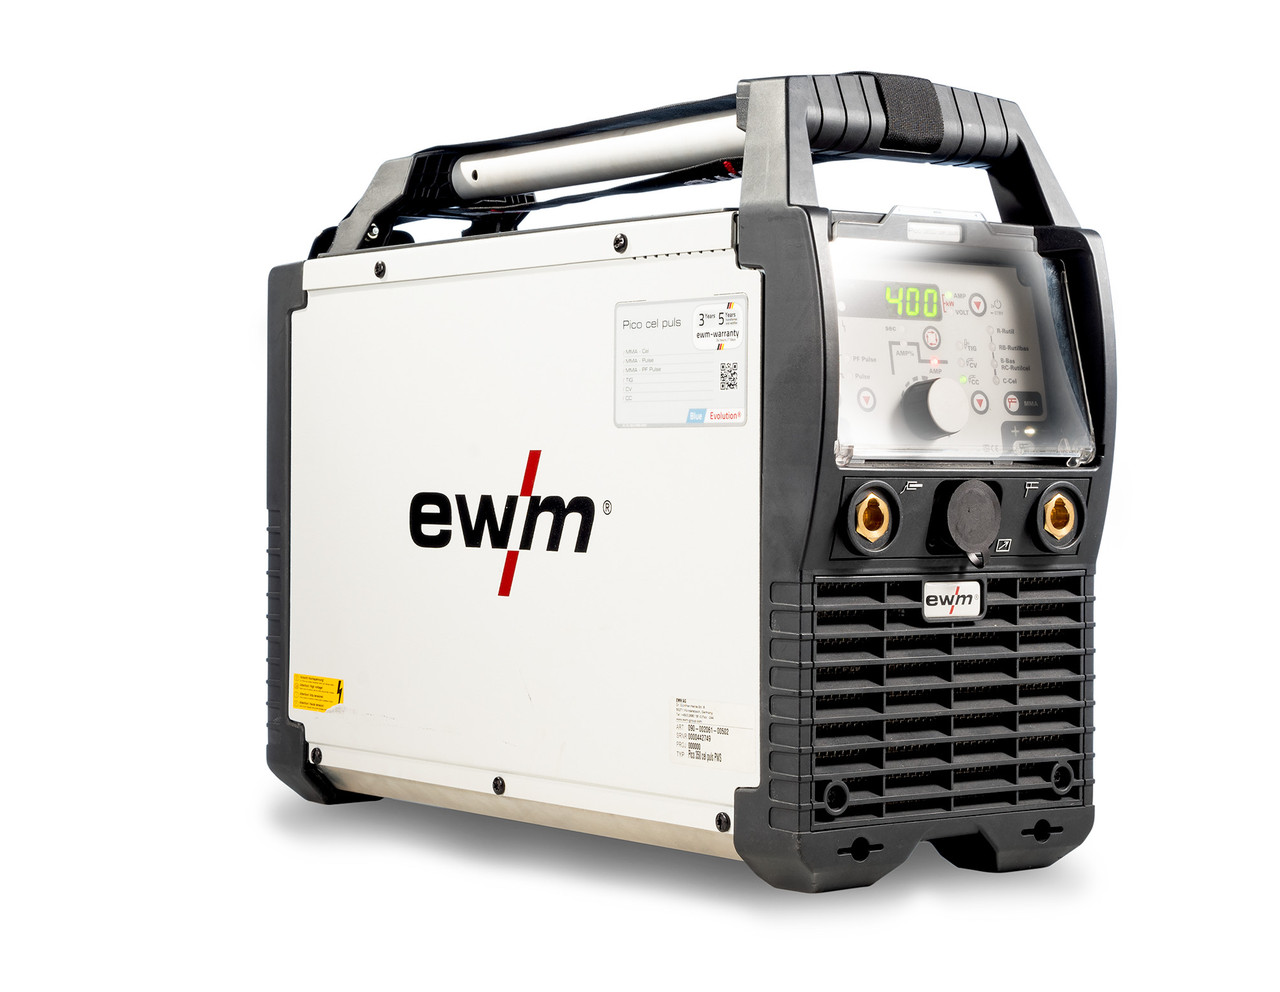 EWM Апарат для зварювання електродами Pico 400 cel puls pws